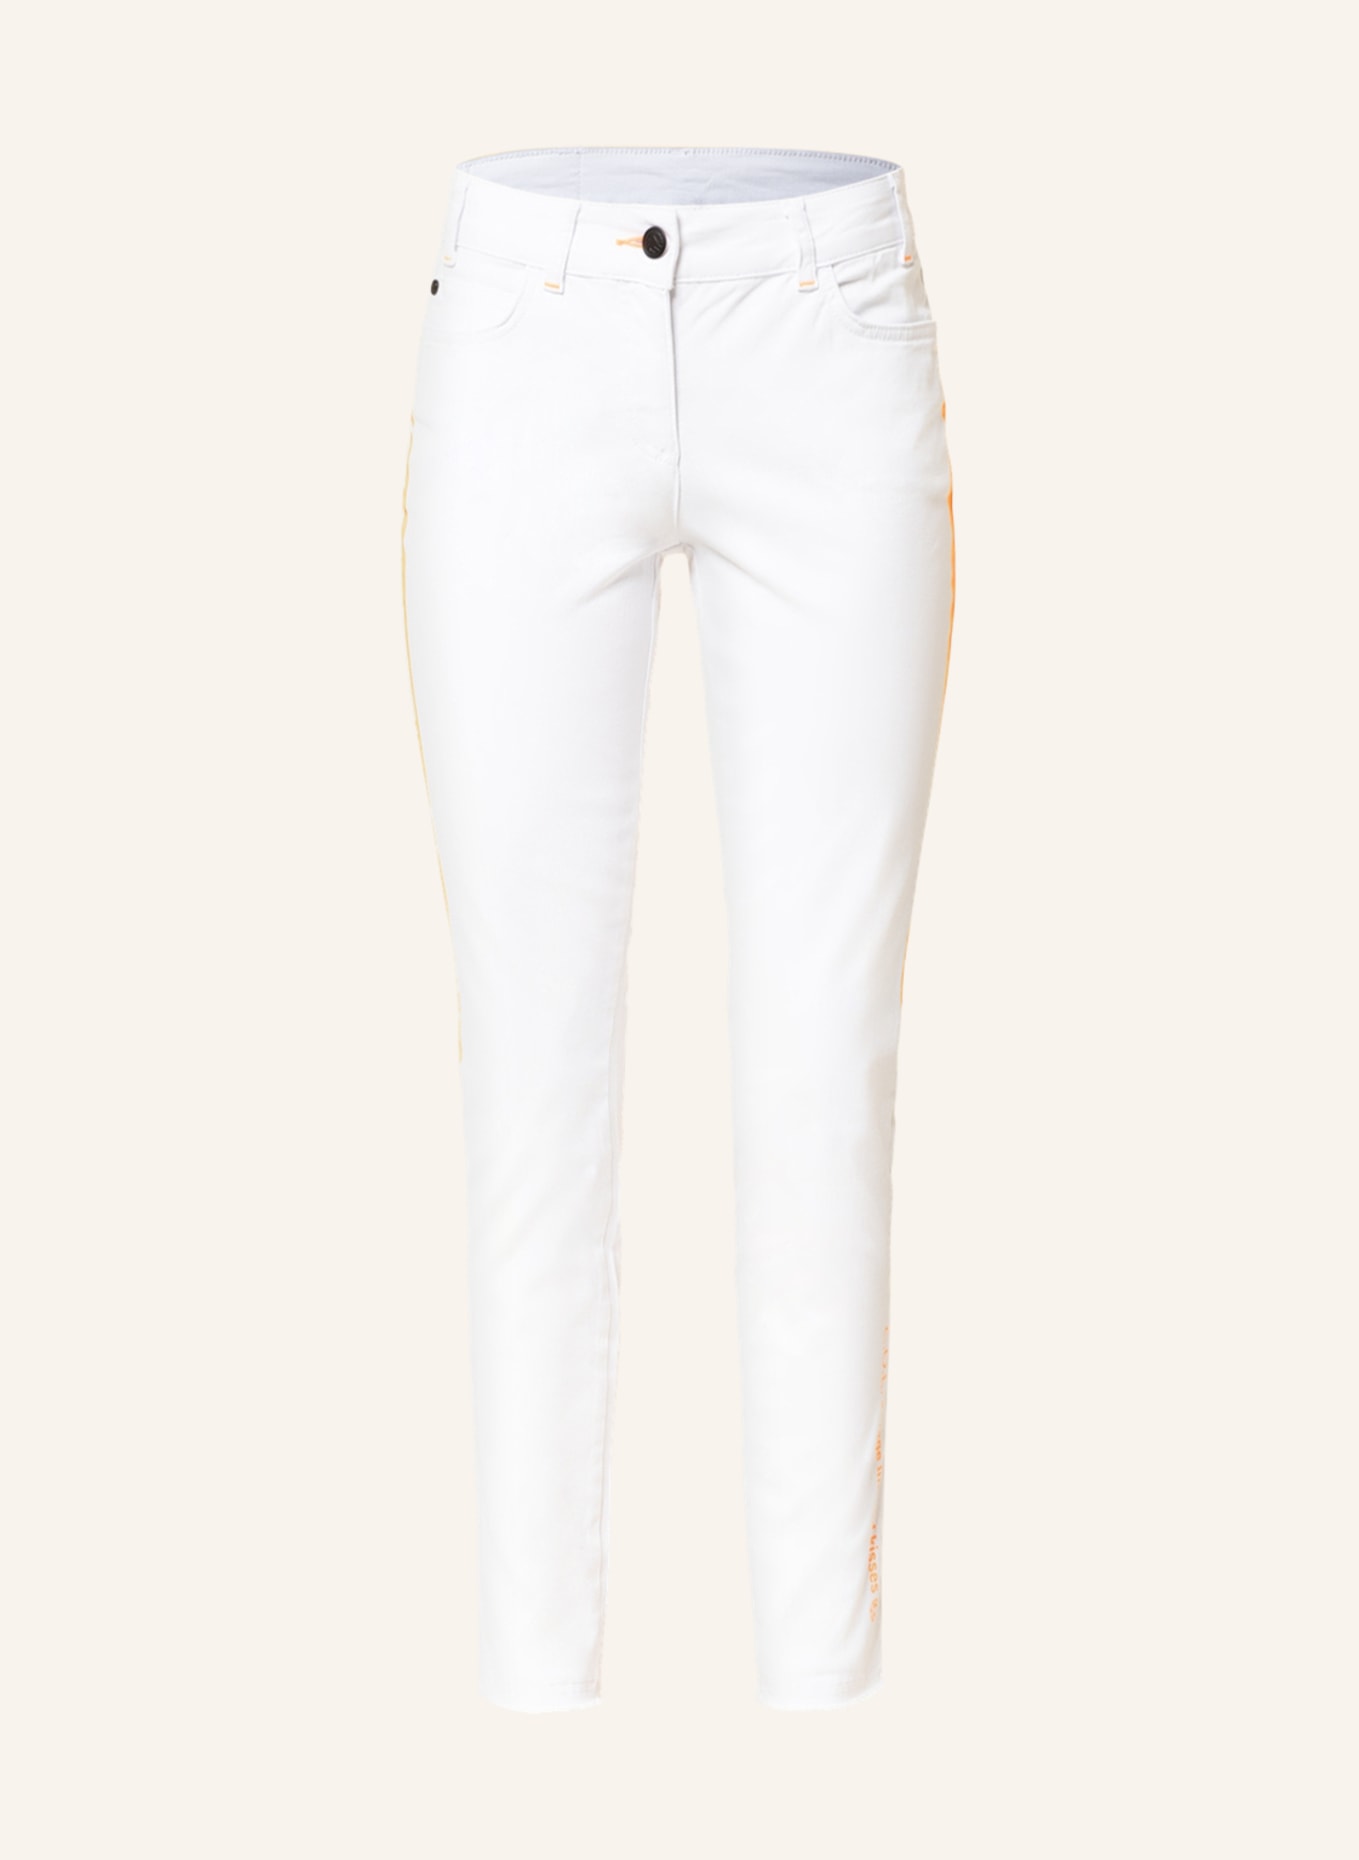 SPORTALM Skinny Jeans , Farbe: 01 OPTICAL WHITE (Bild 1)